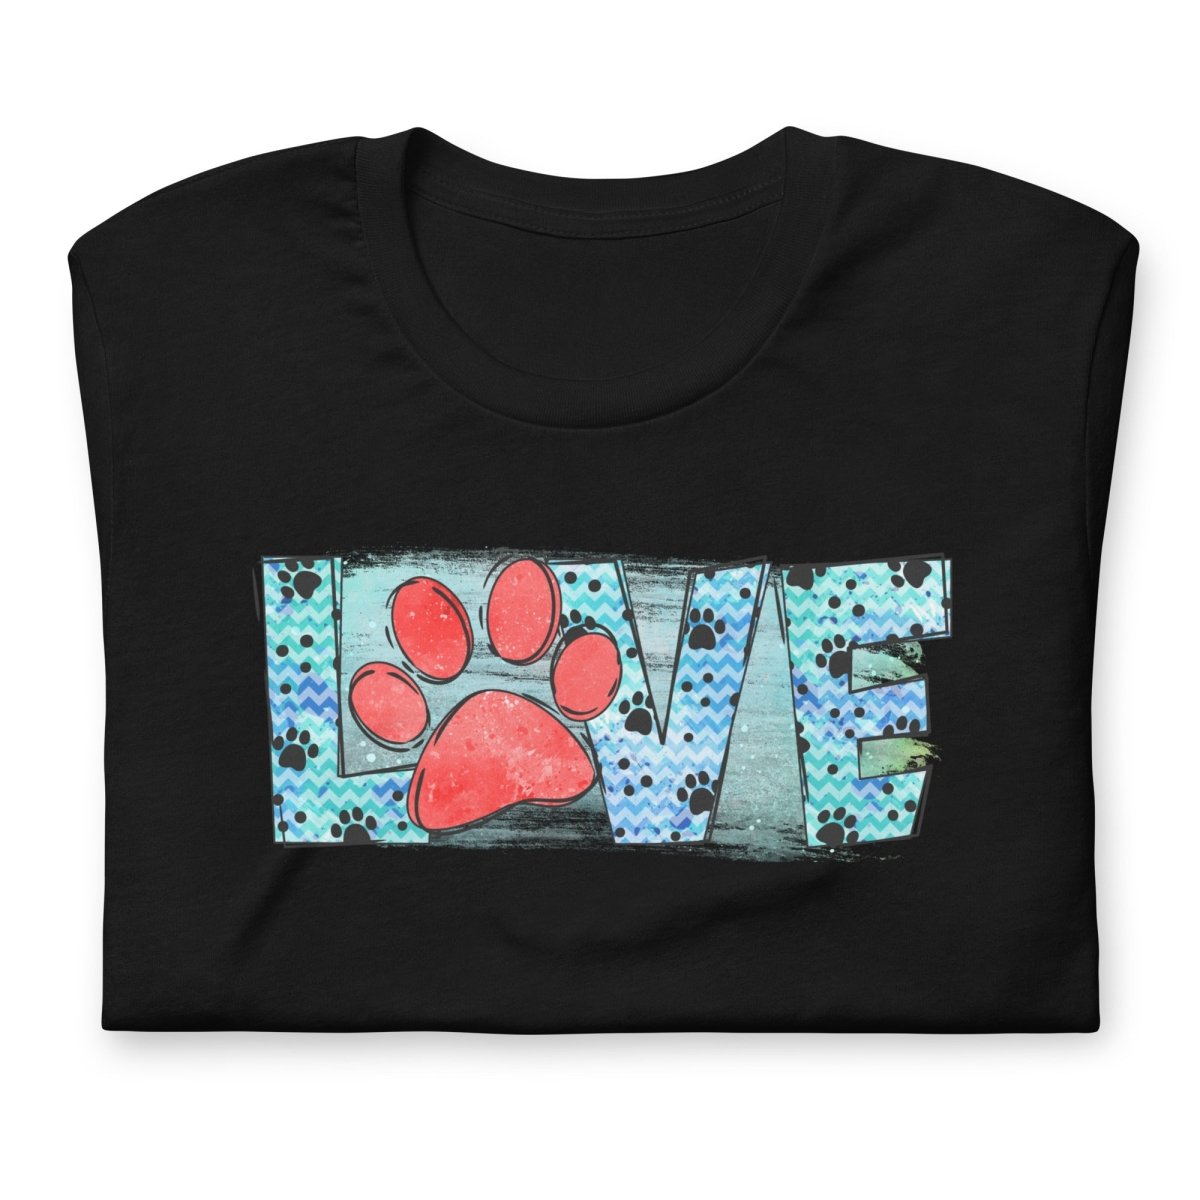 Dog Mom Love T-Shirt - DoggyLoveandMore